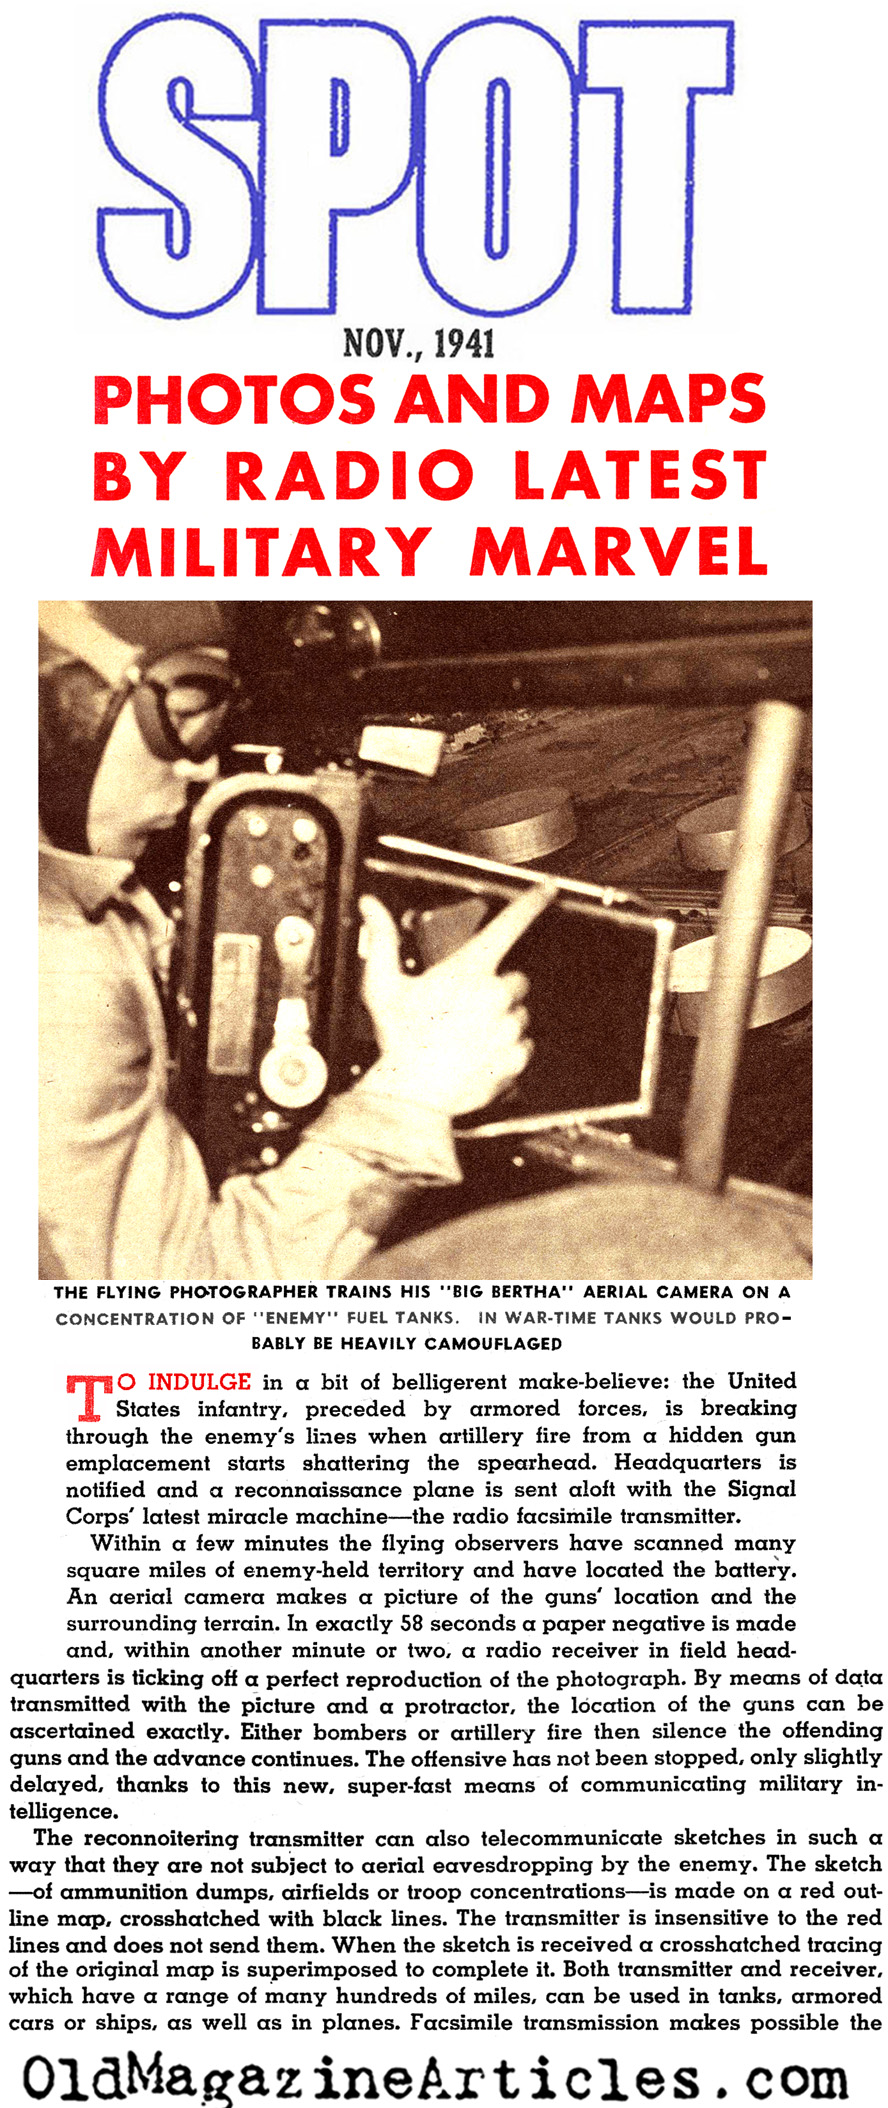 The Radio Facsimile Transmitter (Spot Magazine, 1941)